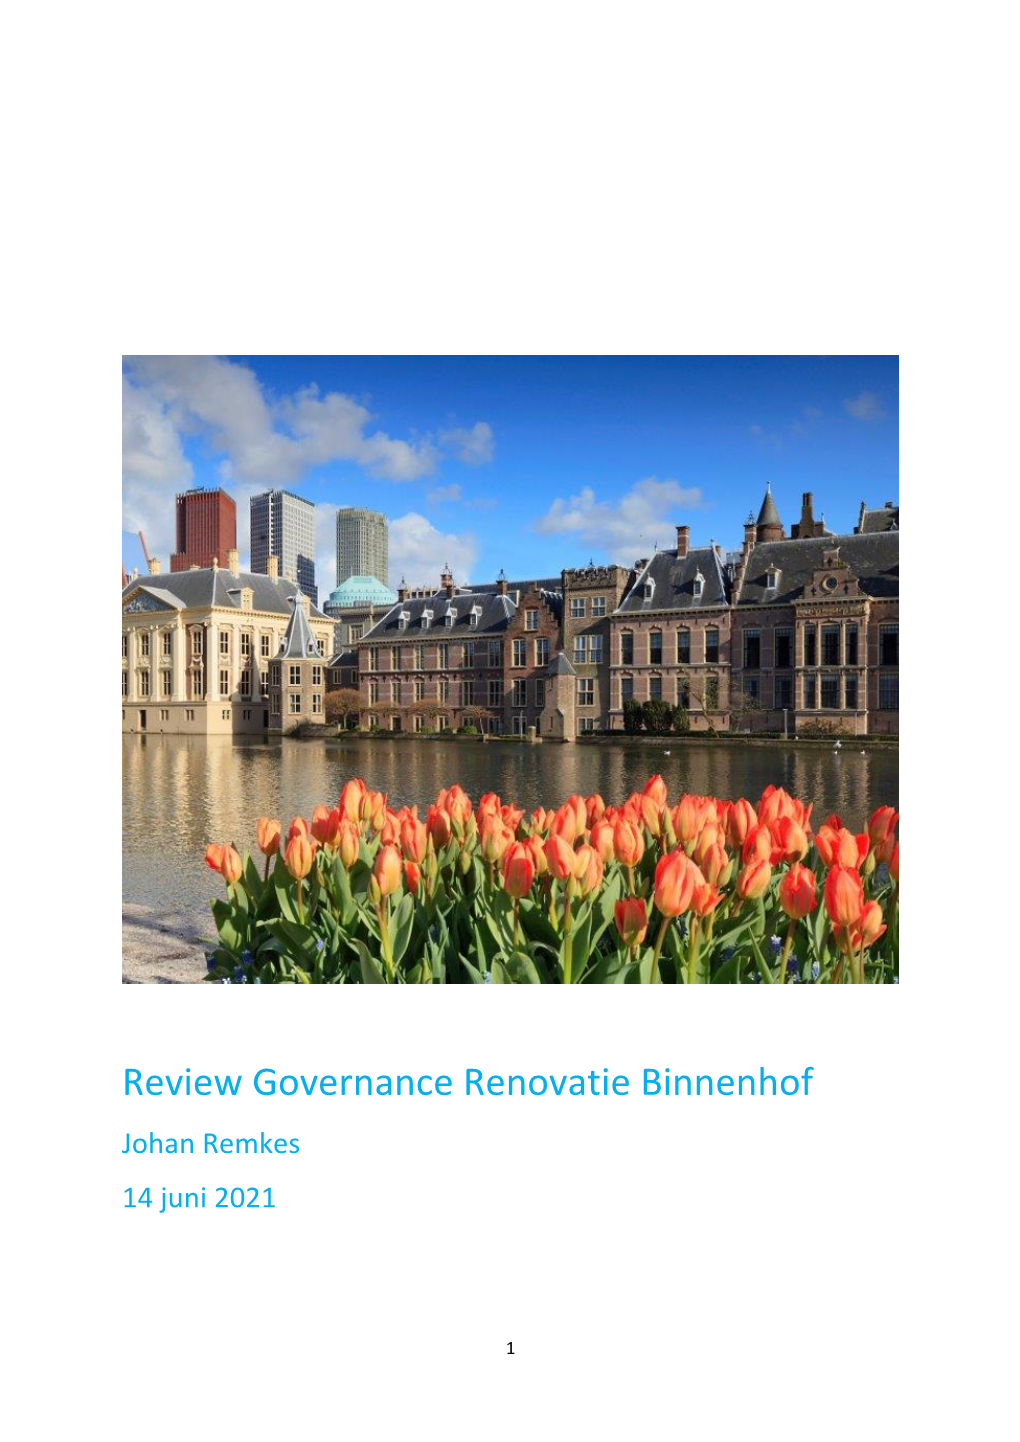 Review Governance Renovatie Binnenhof Johan Remkes 14 Juni 2021